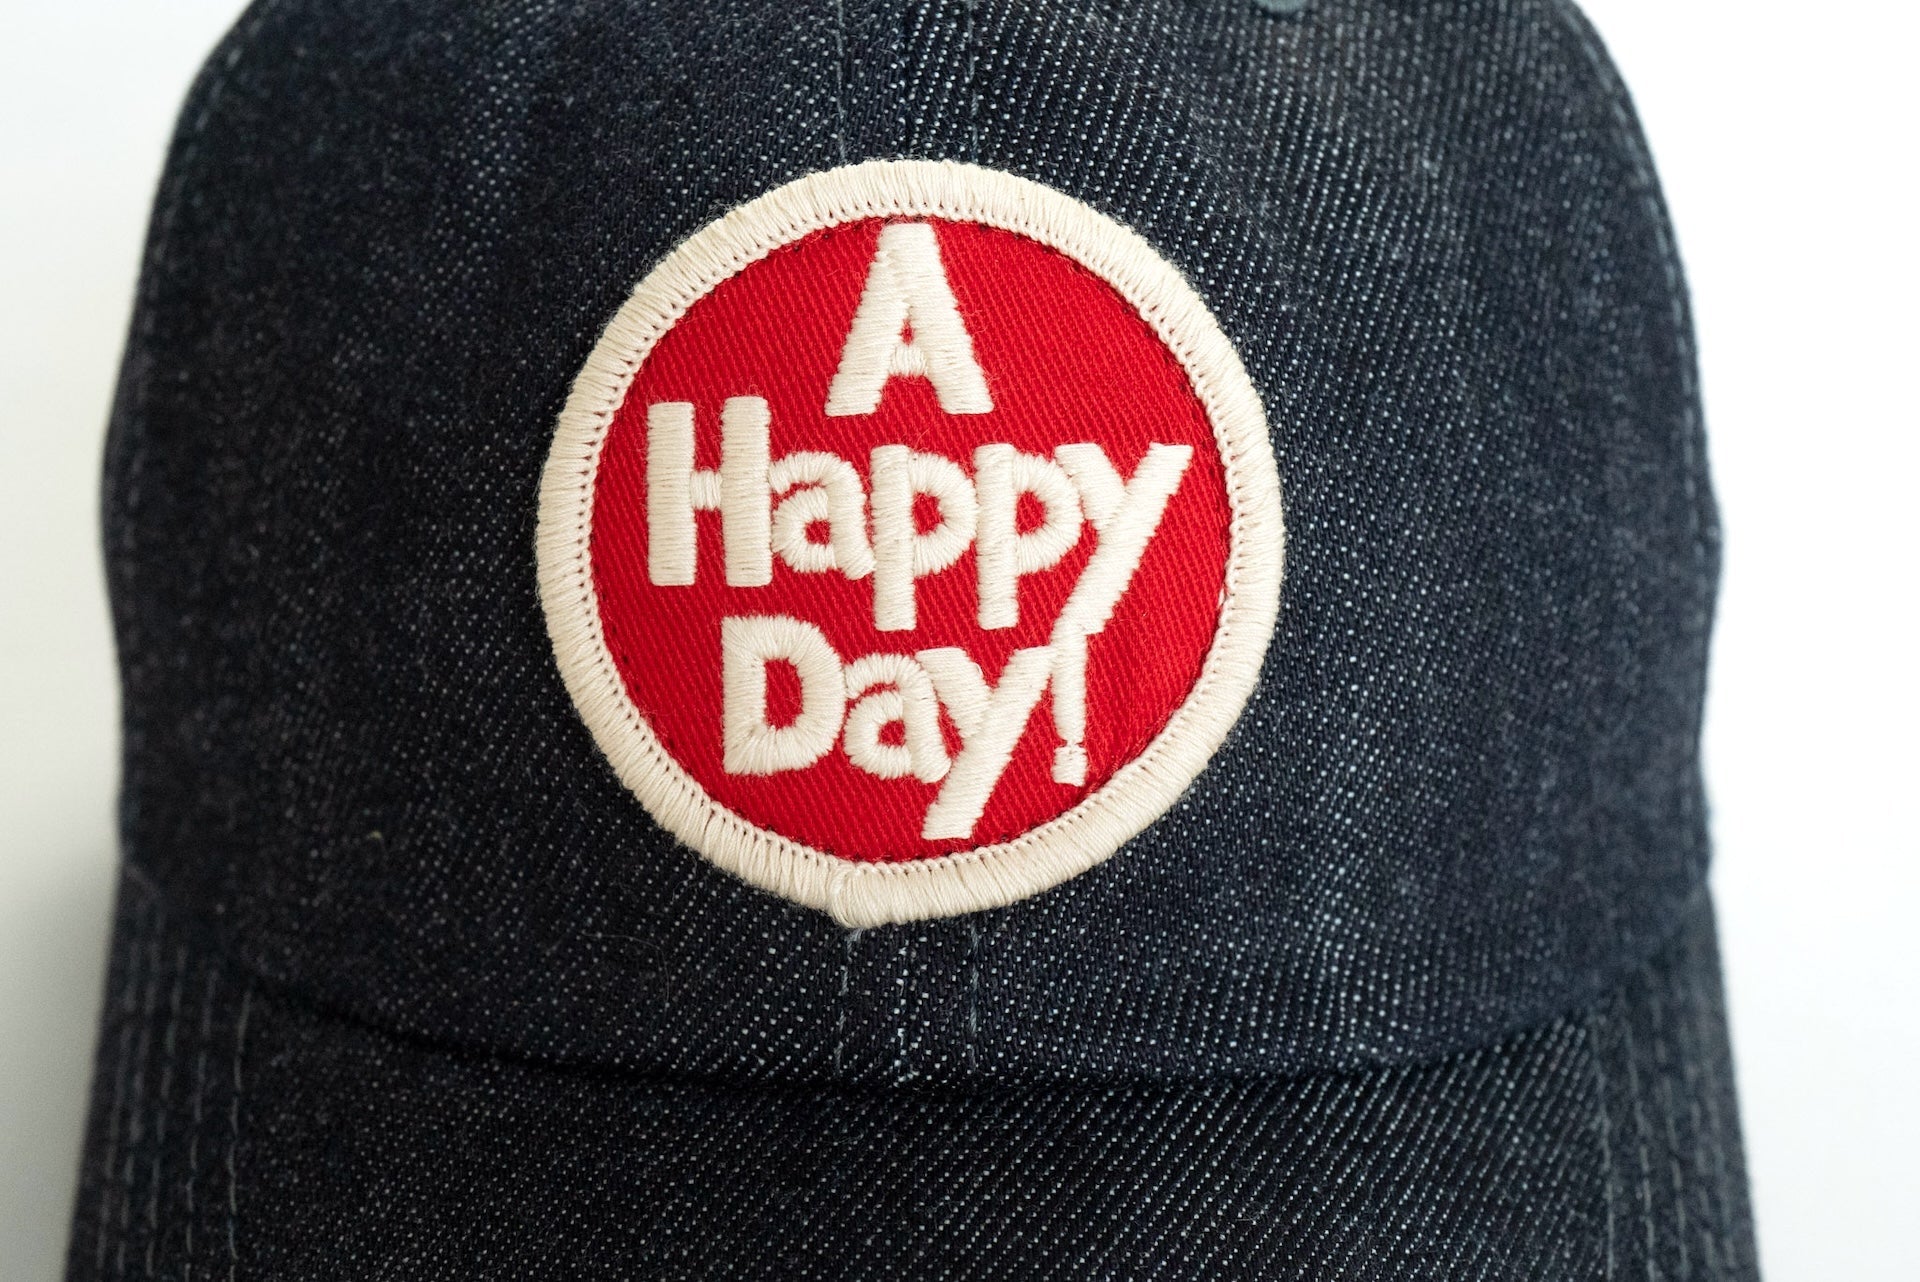 UES "A Happy Day" Denim Baseball Cap (Red)